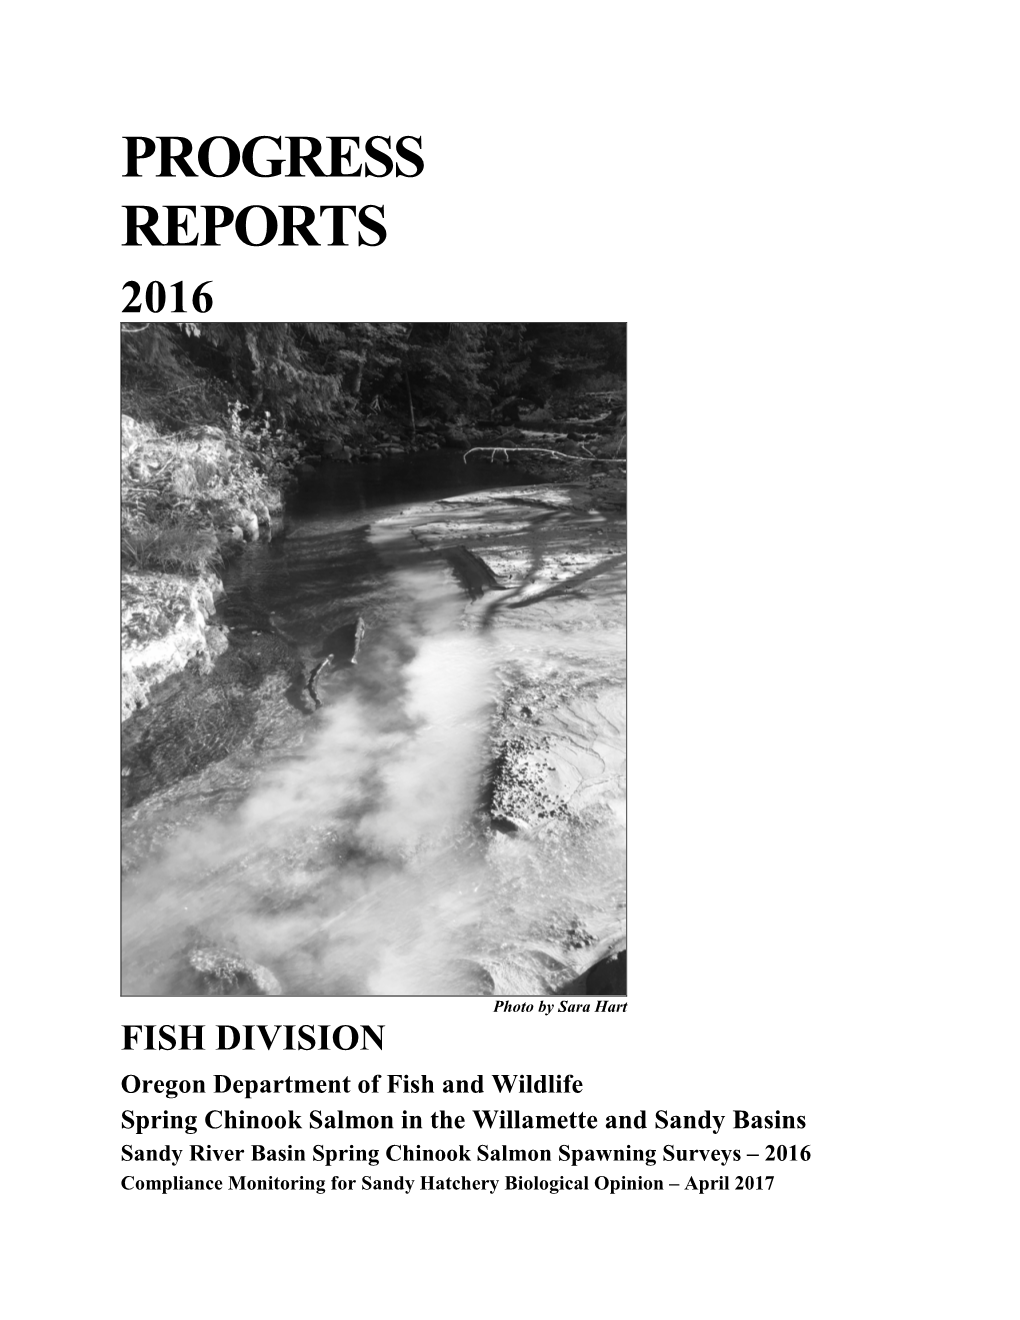 Sandy Basin Spring Chinook Spawning Surveys – 2010